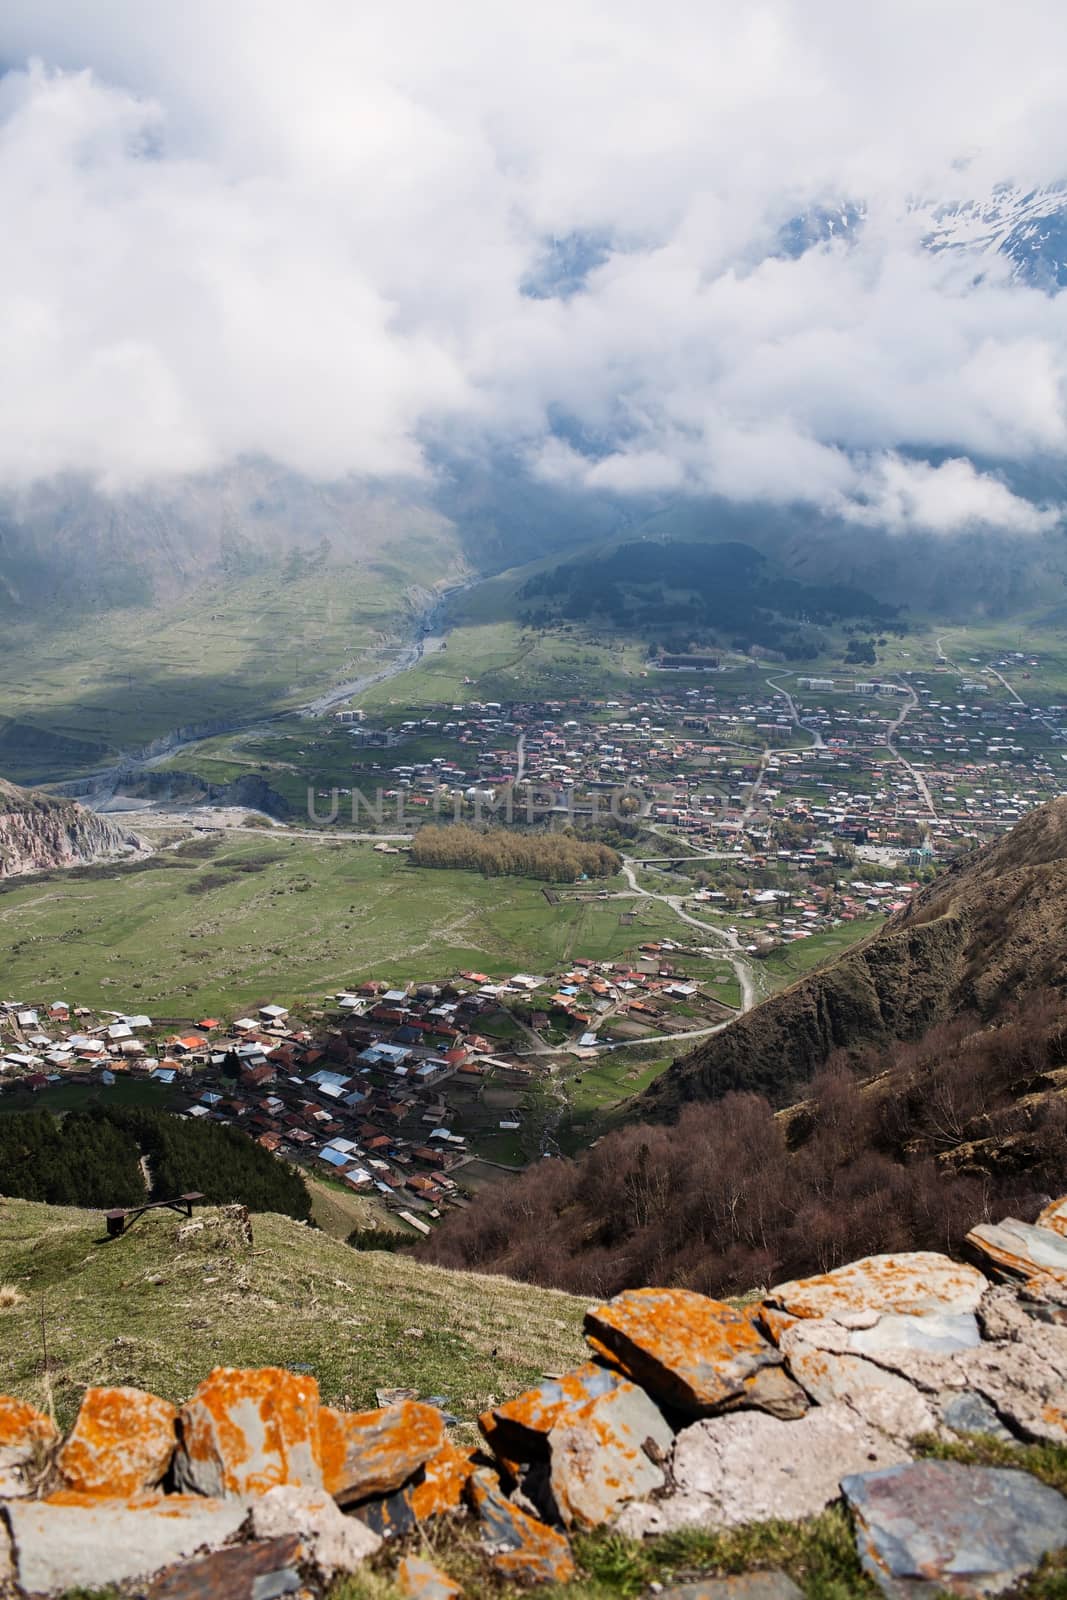 Aerial view on Kazbegi/Stepantsminda village in Georgia 